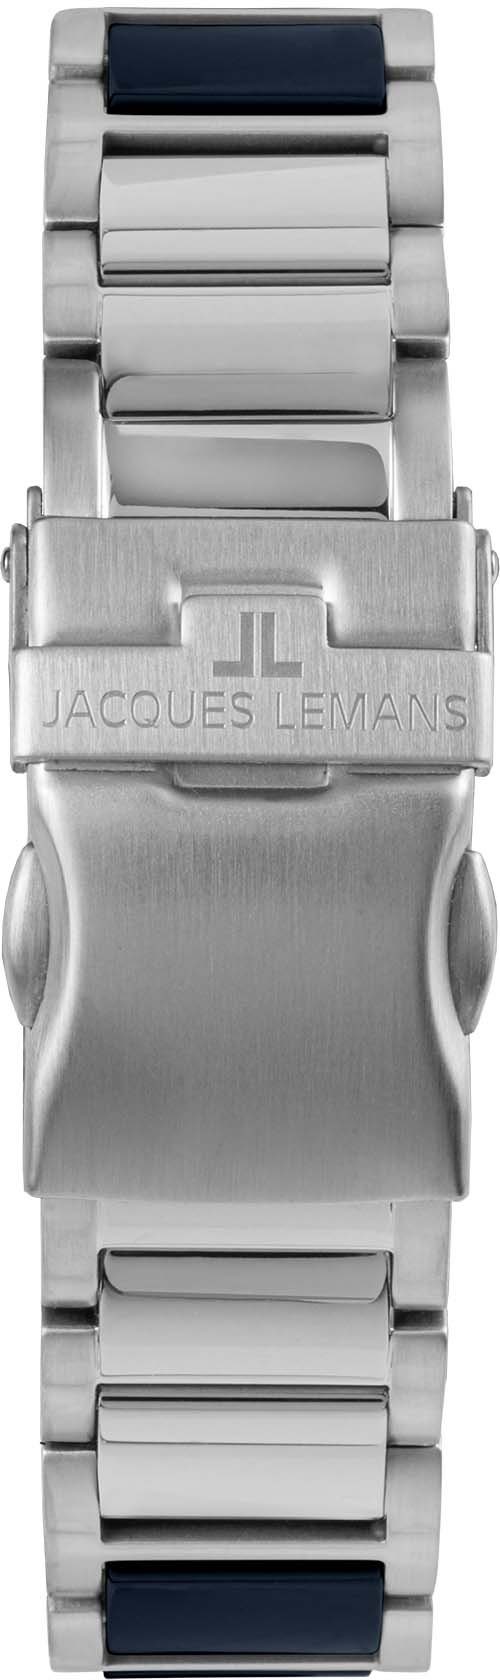 Liverpool, Lemans Jacques 42-10B Keramikuhr